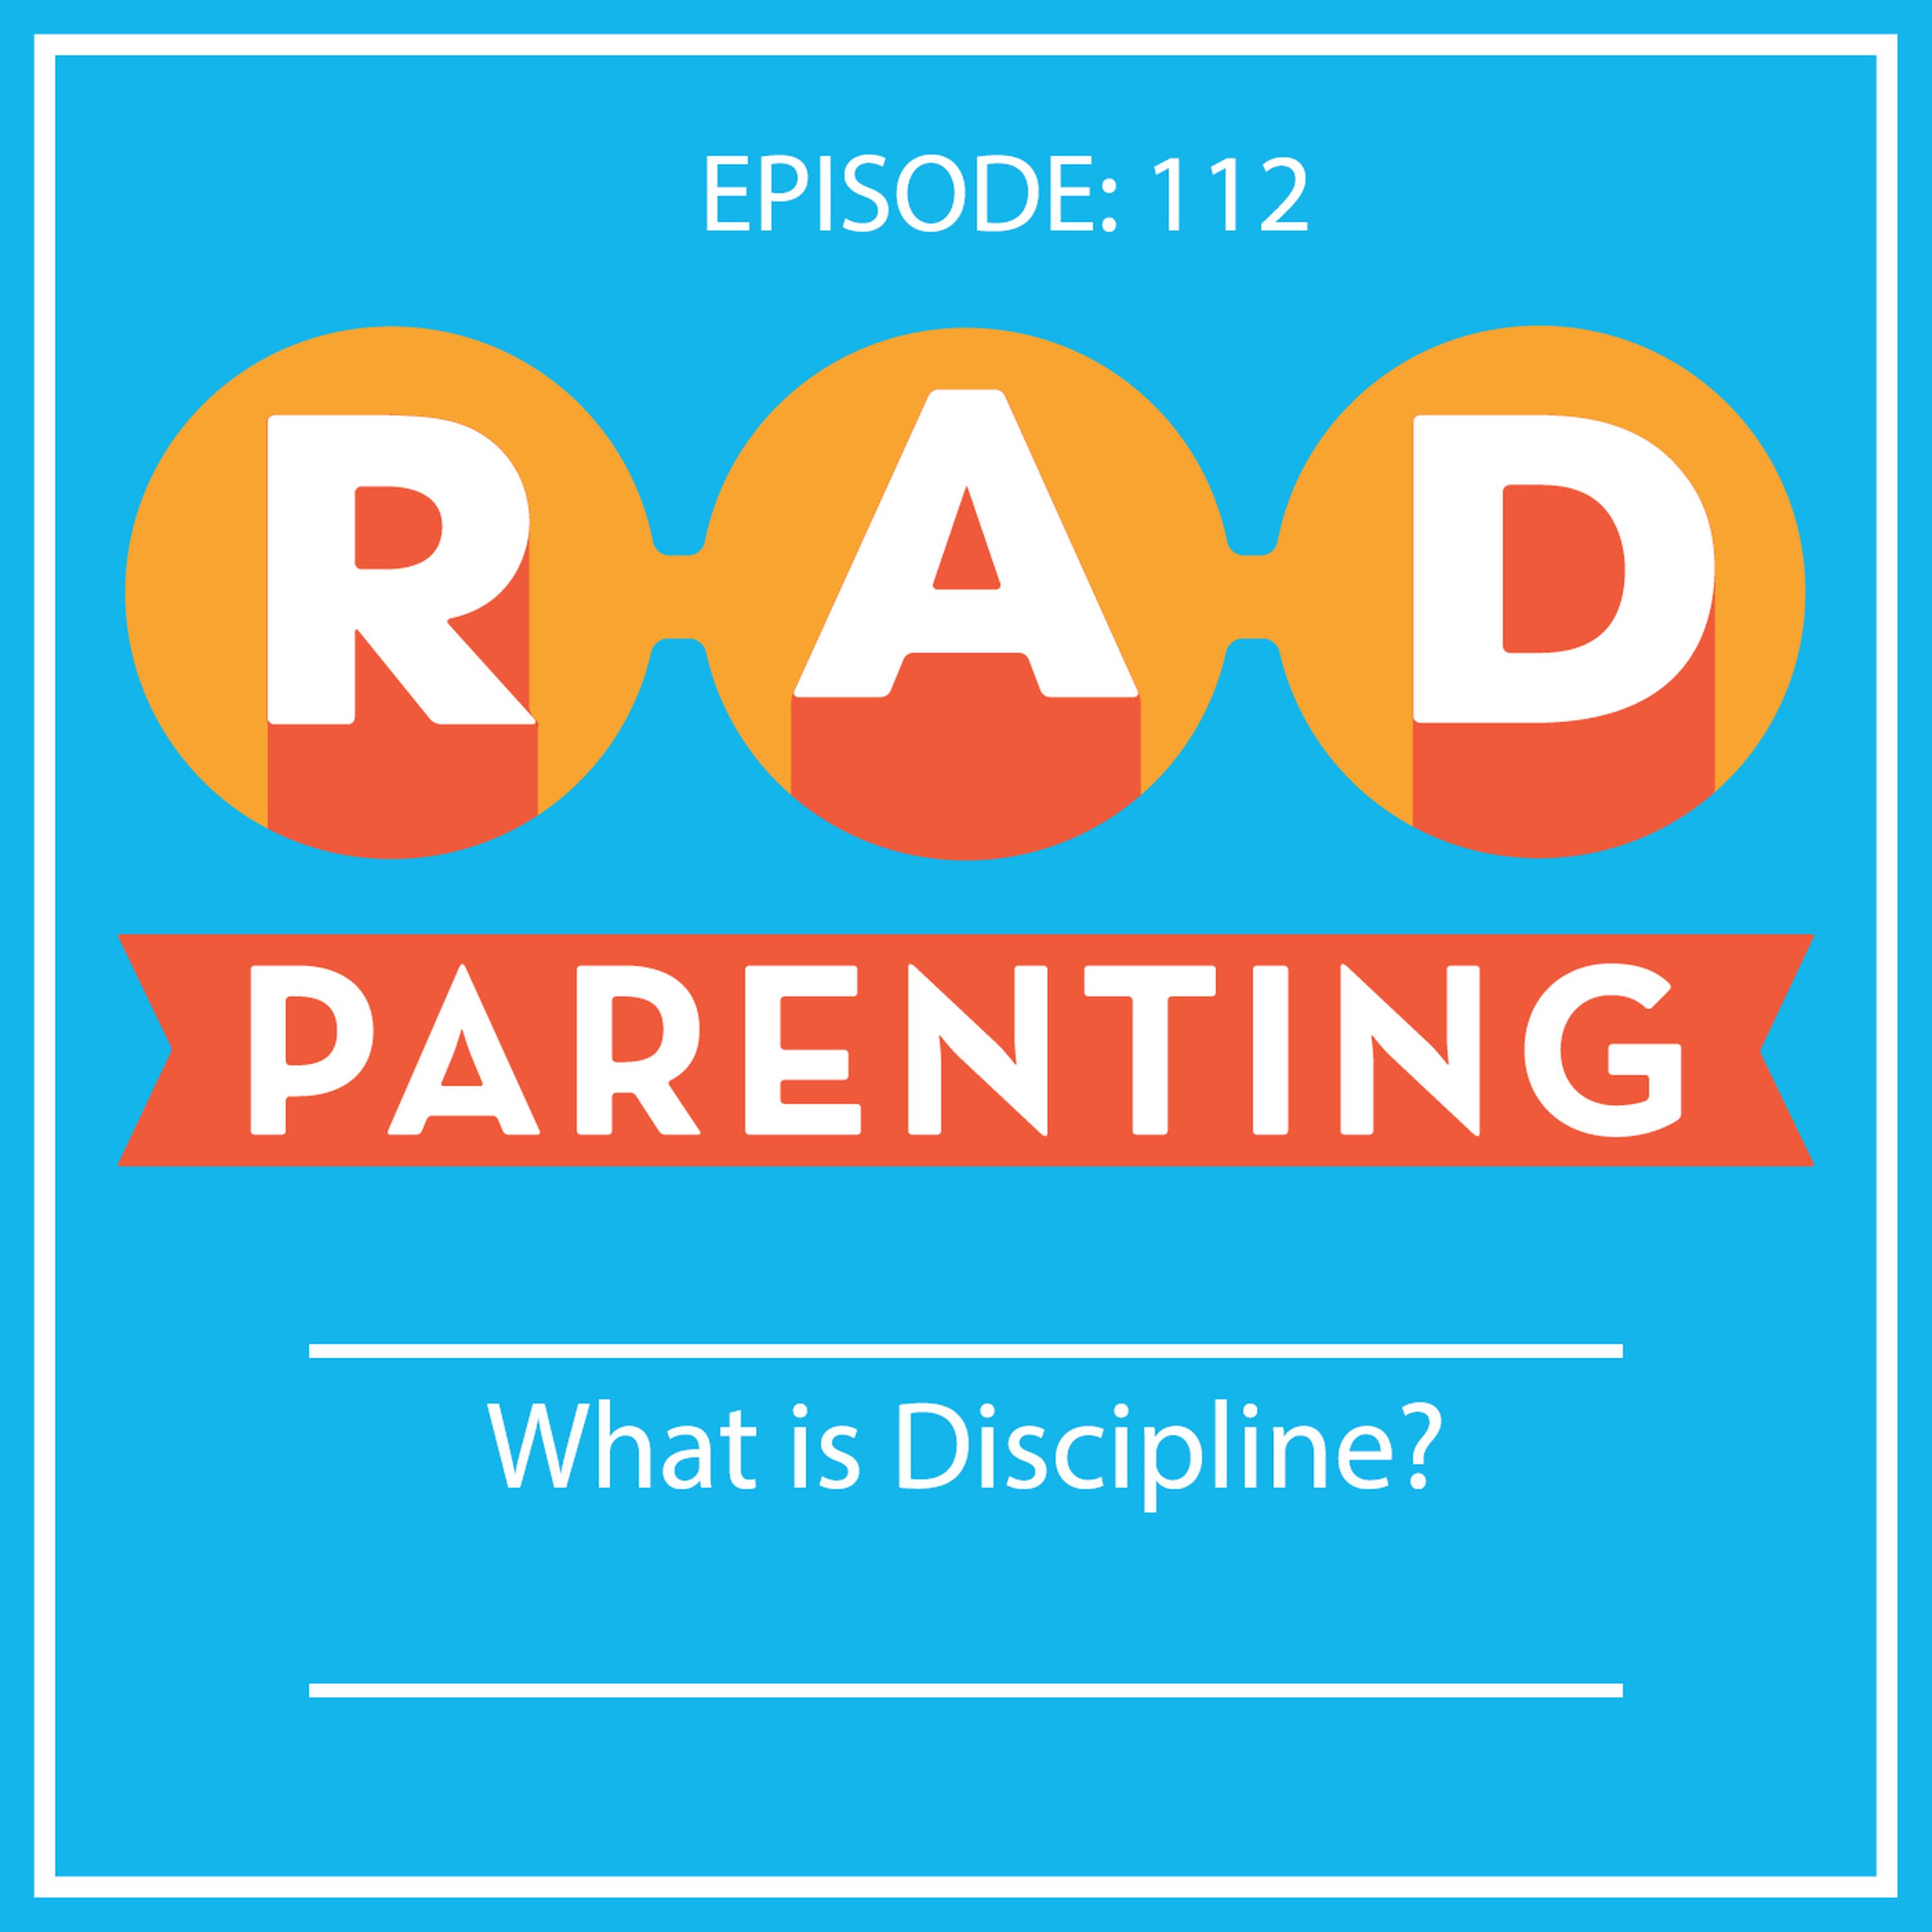 What is Discipline?